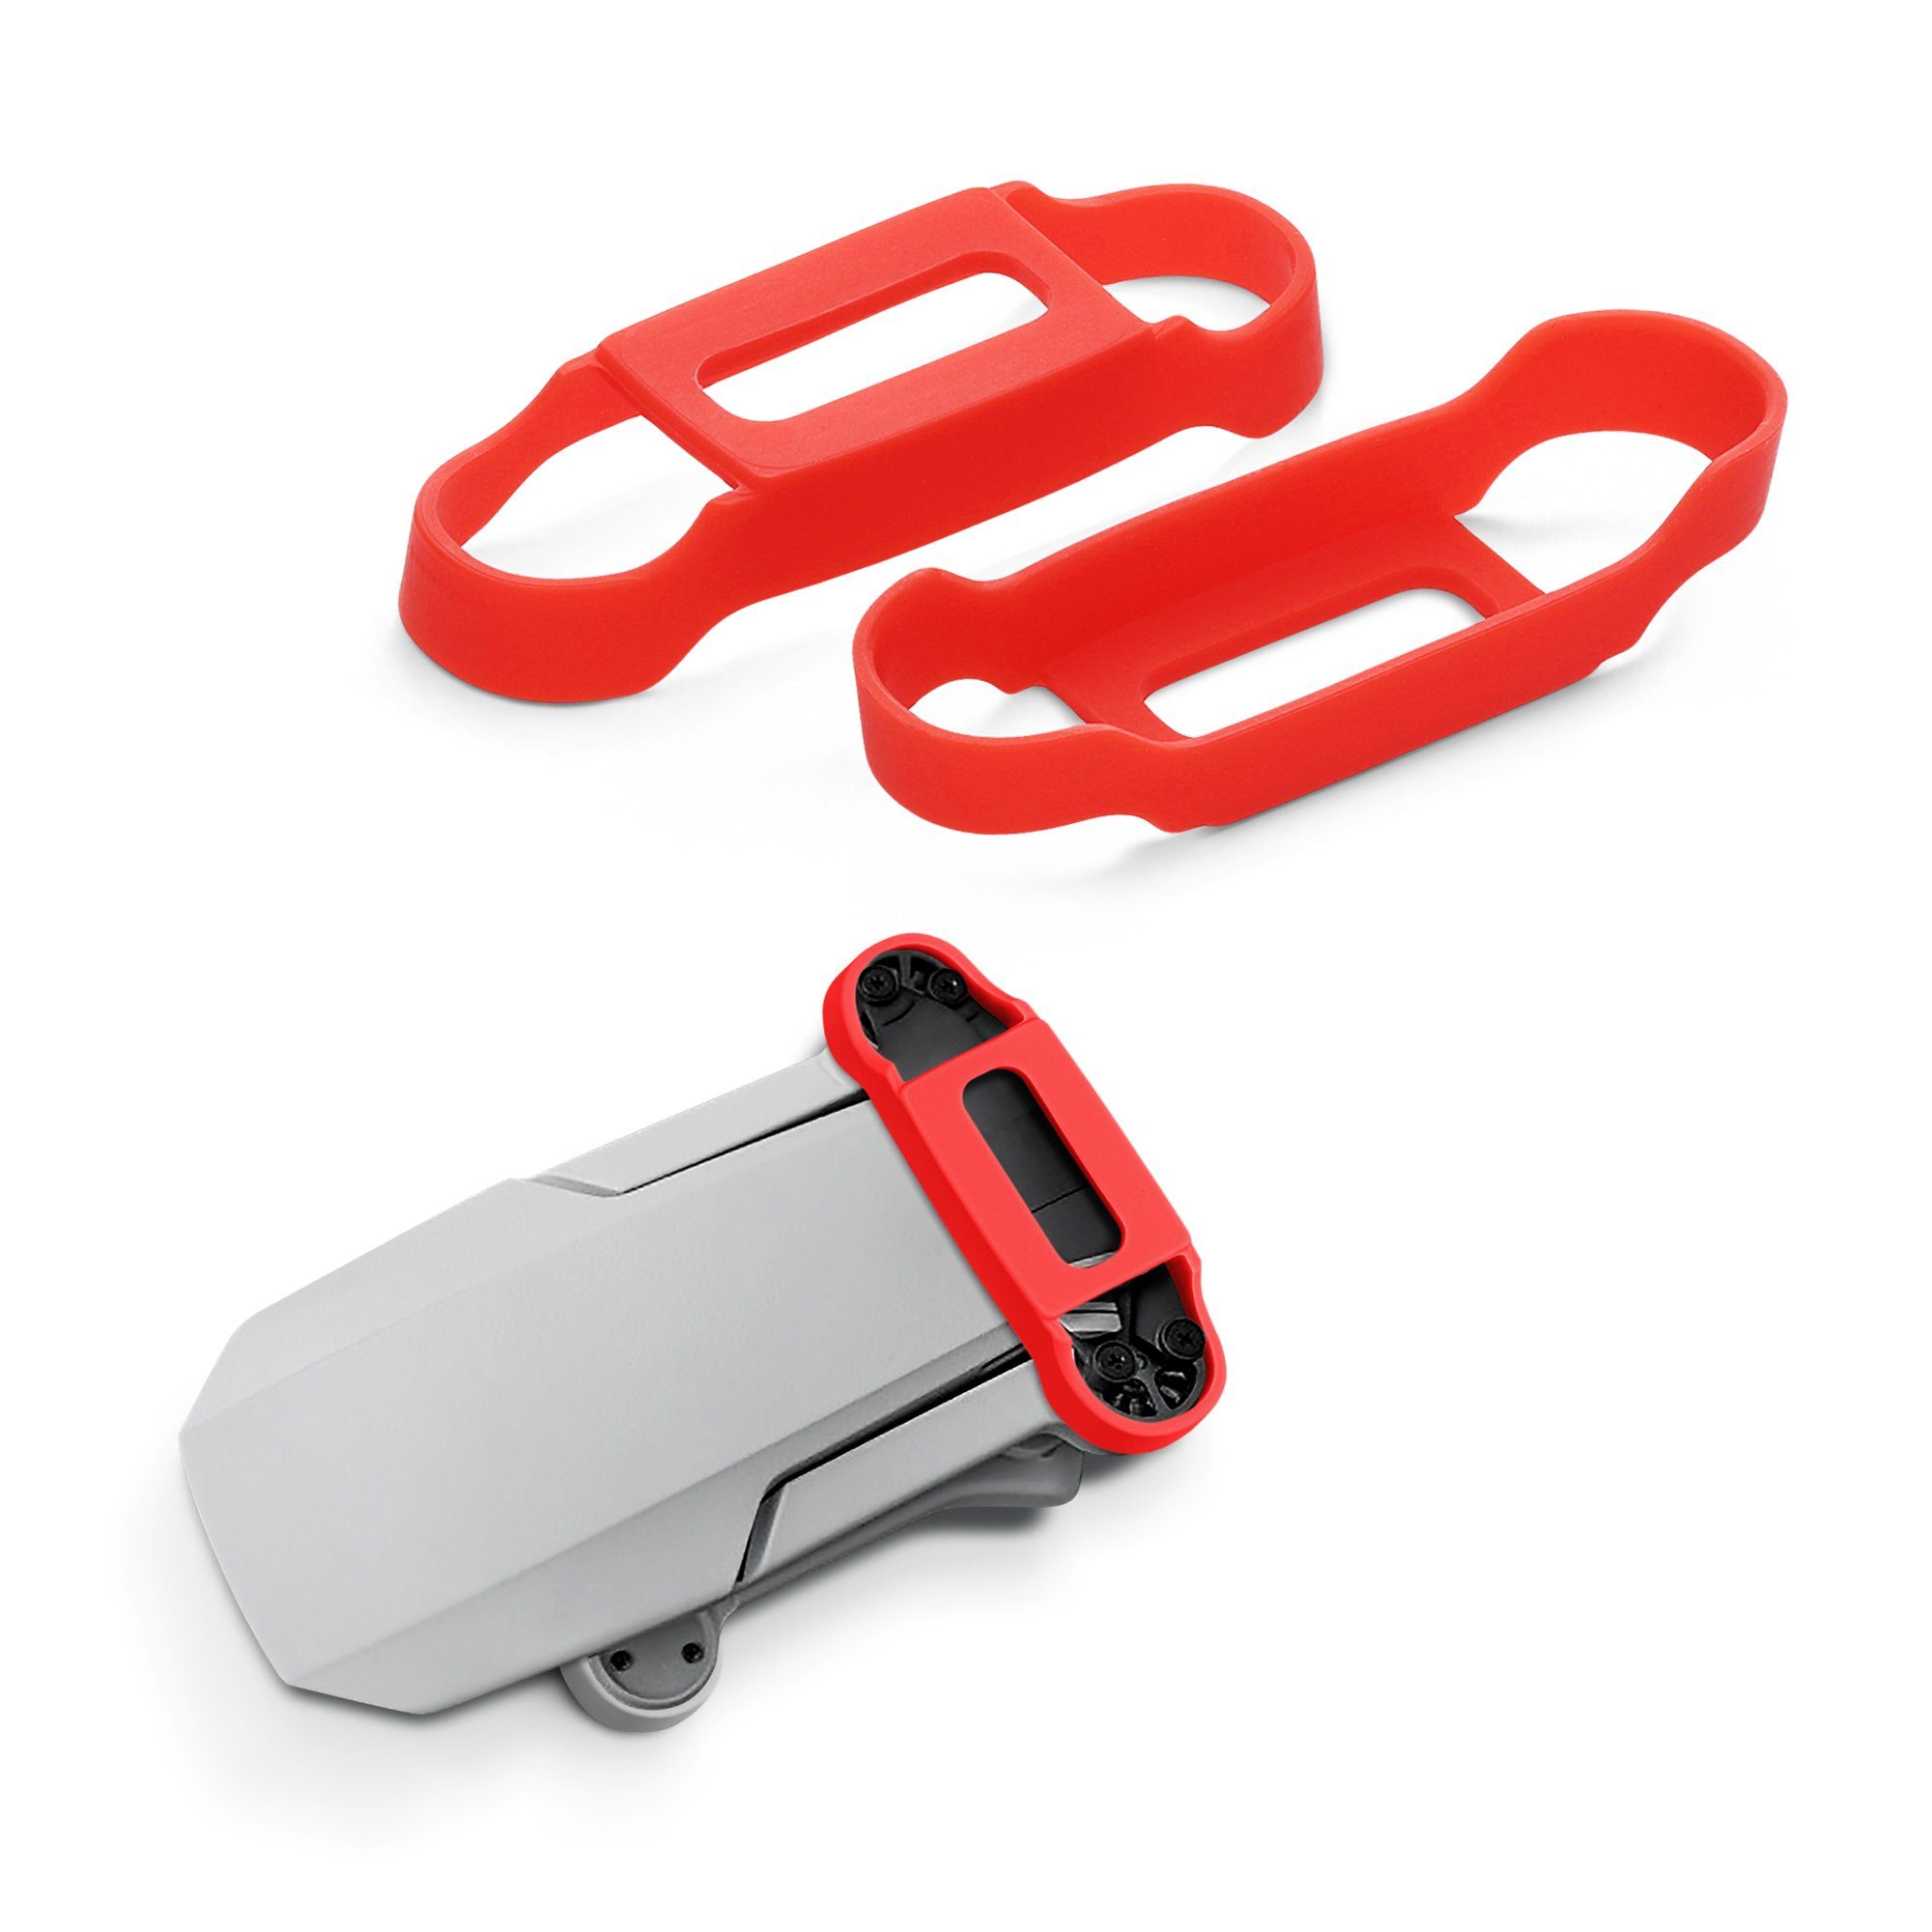 Mavic Mini für Transport kwmobile Zubehör 2x Rot) Halter Schutz - (Cover Mini Mini 2 Drohne Propeller Drohne DJI / Clip / SE